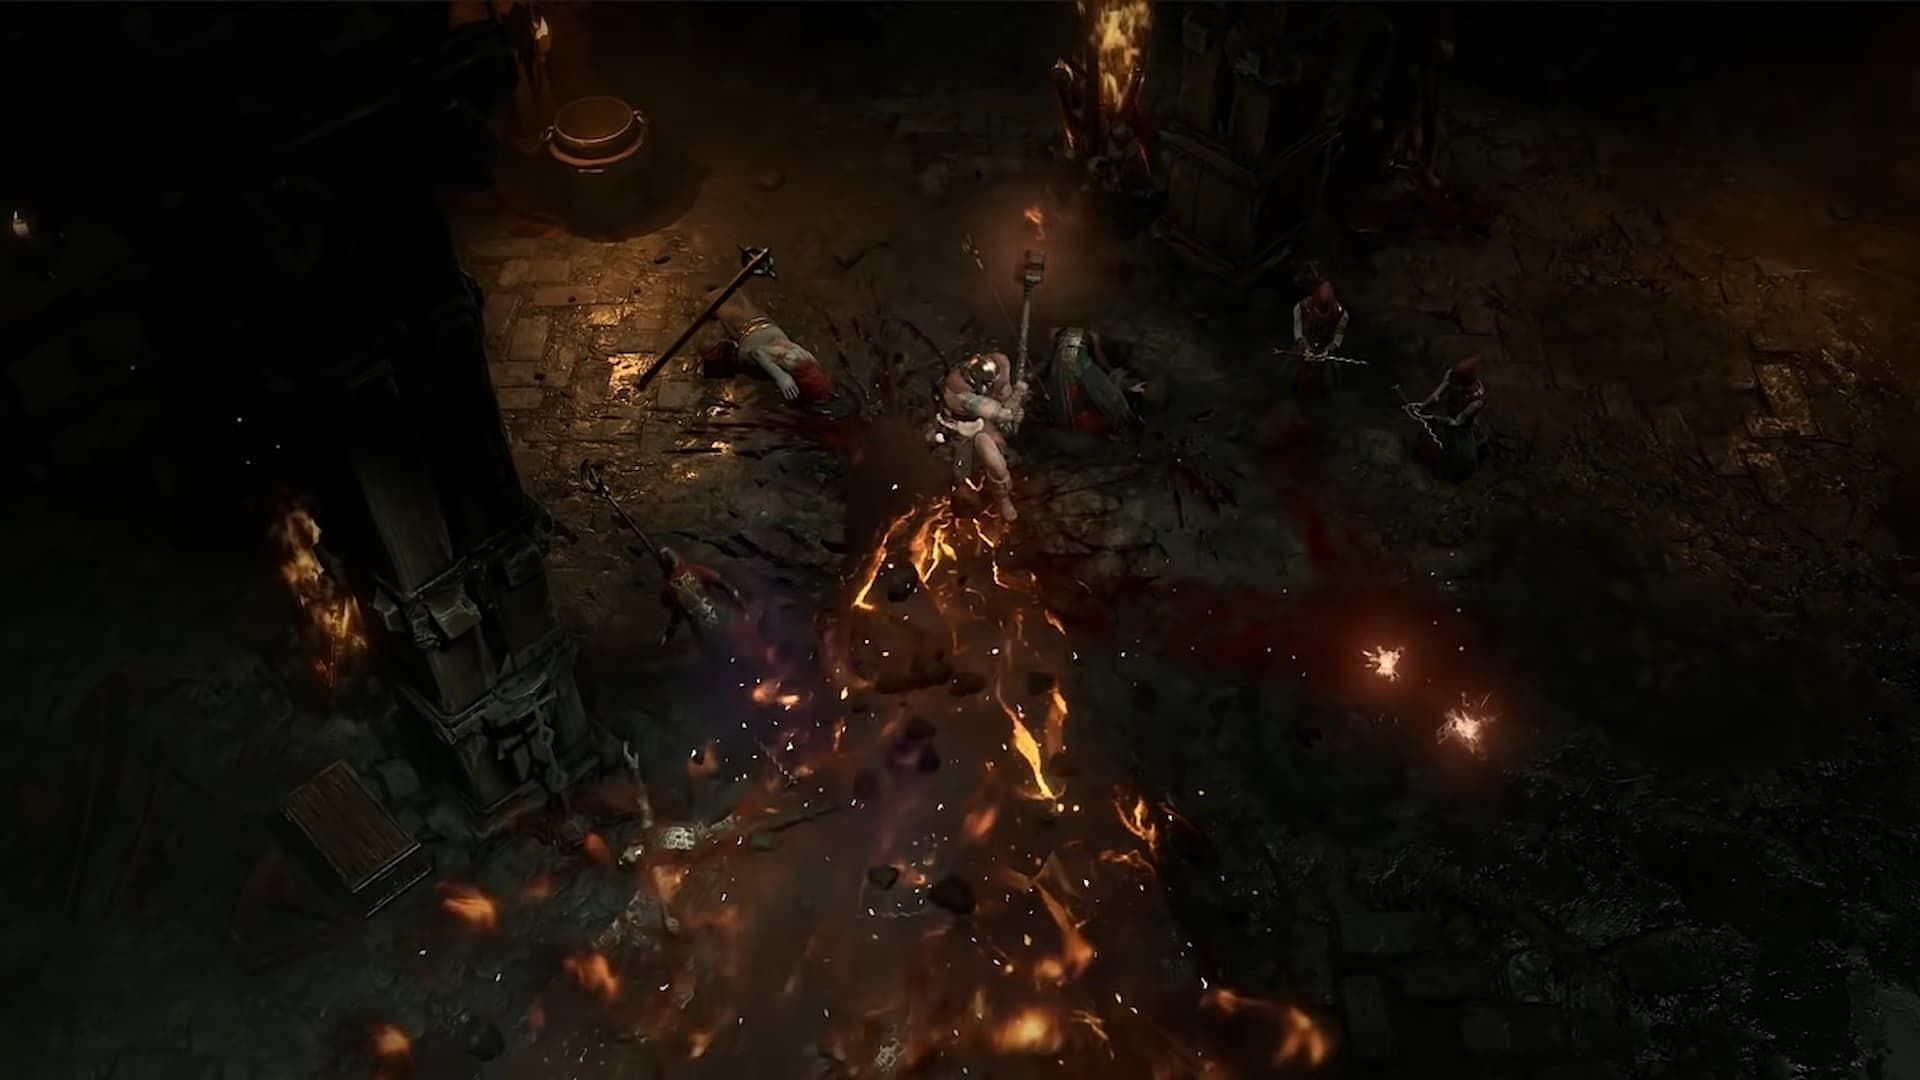 You can evade to dodge incoming attacks in Diablo 4 (Image via Blizzard)